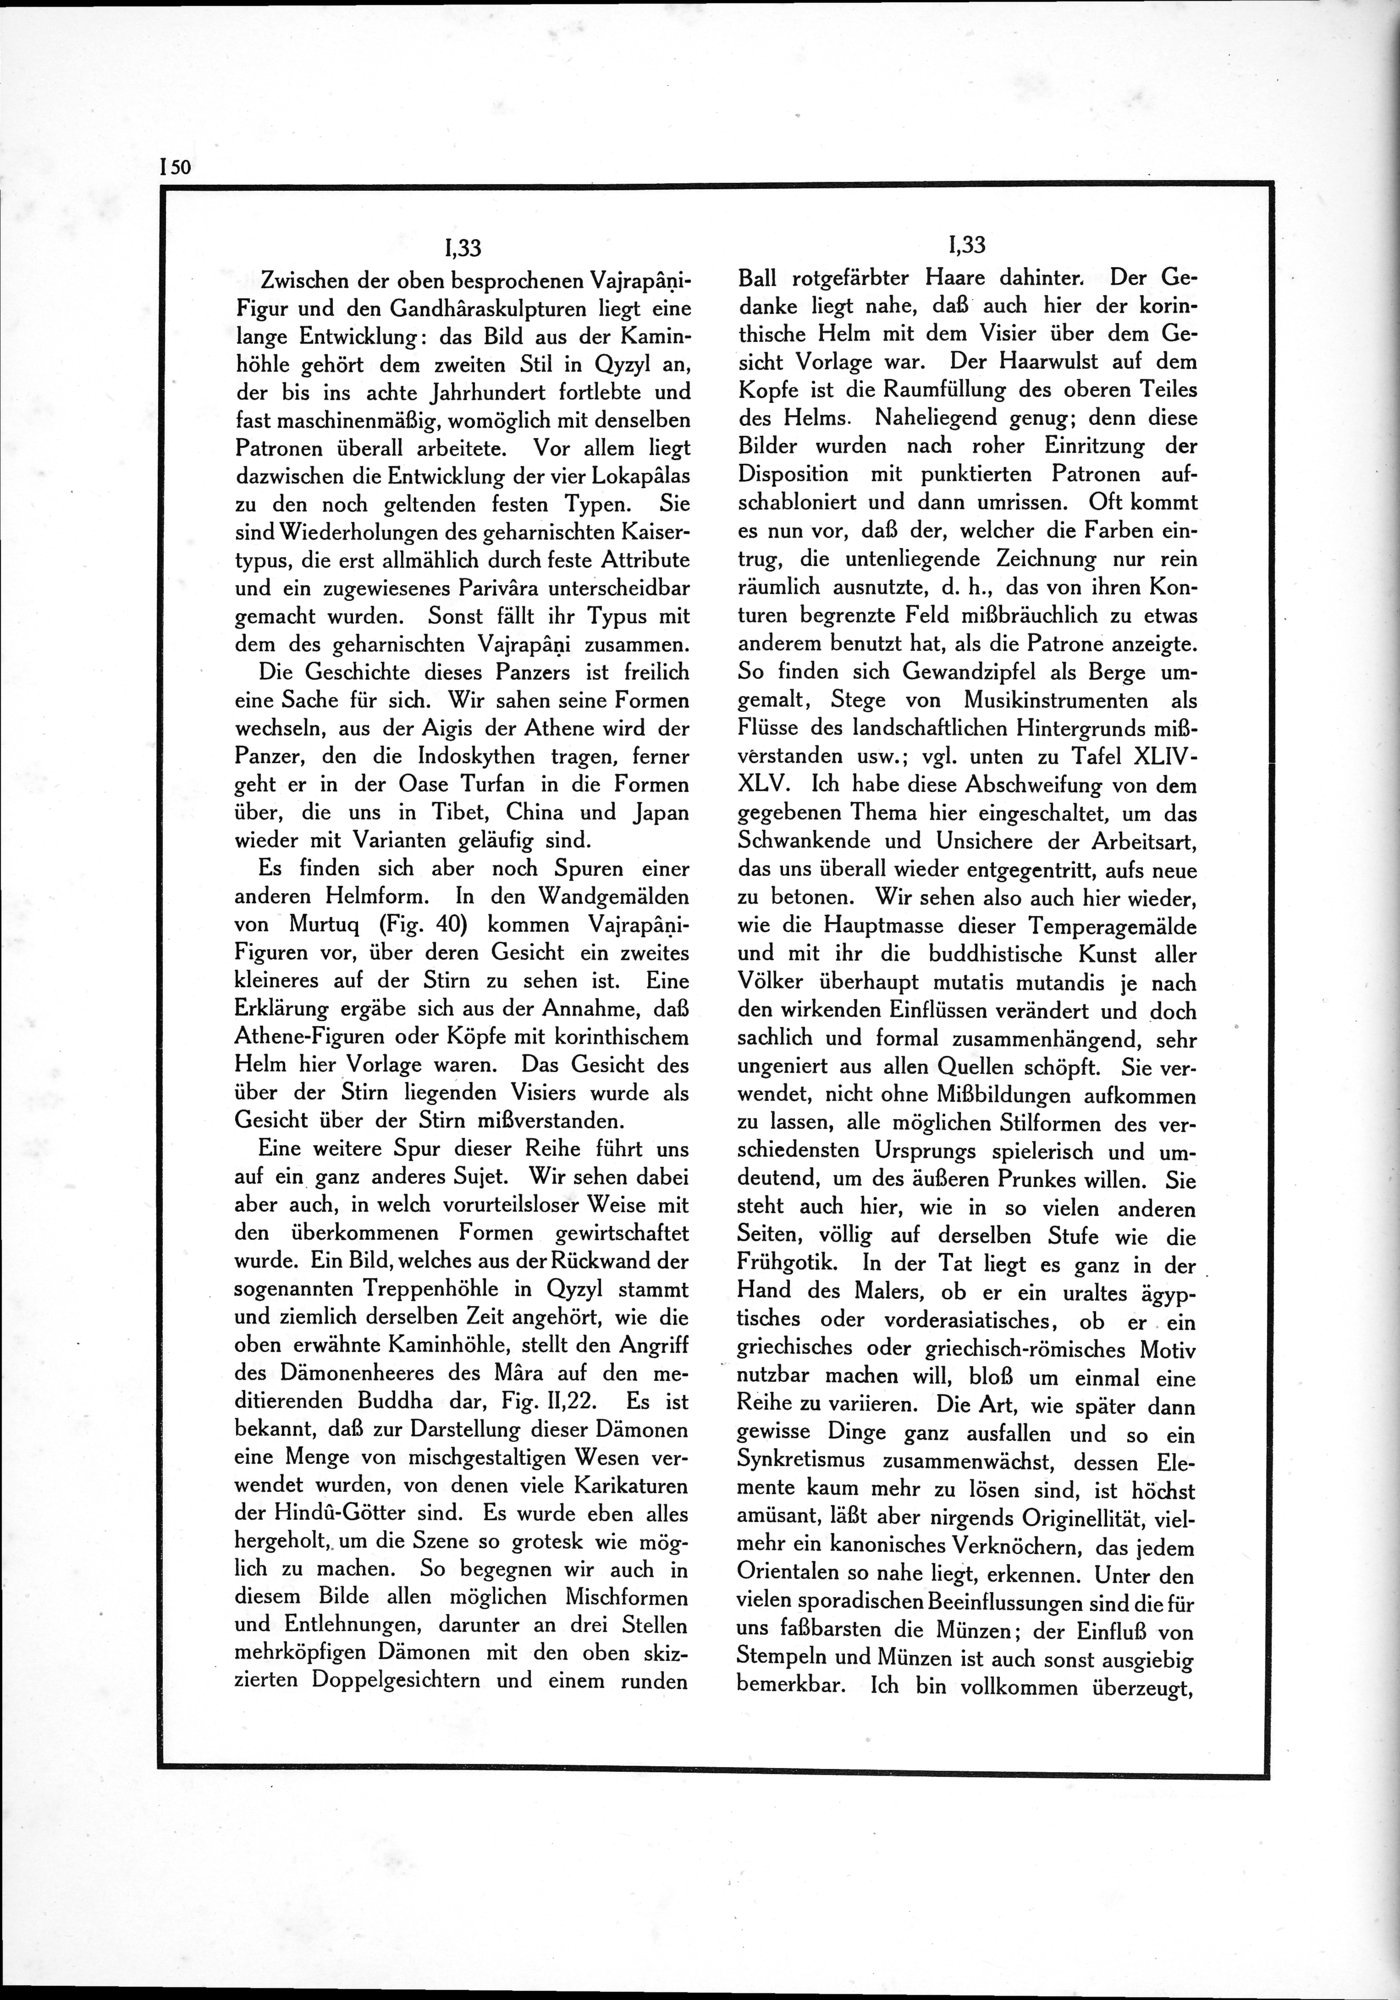 Alt-Kutscha : vol.1 / Page 62 (Grayscale High Resolution Image)